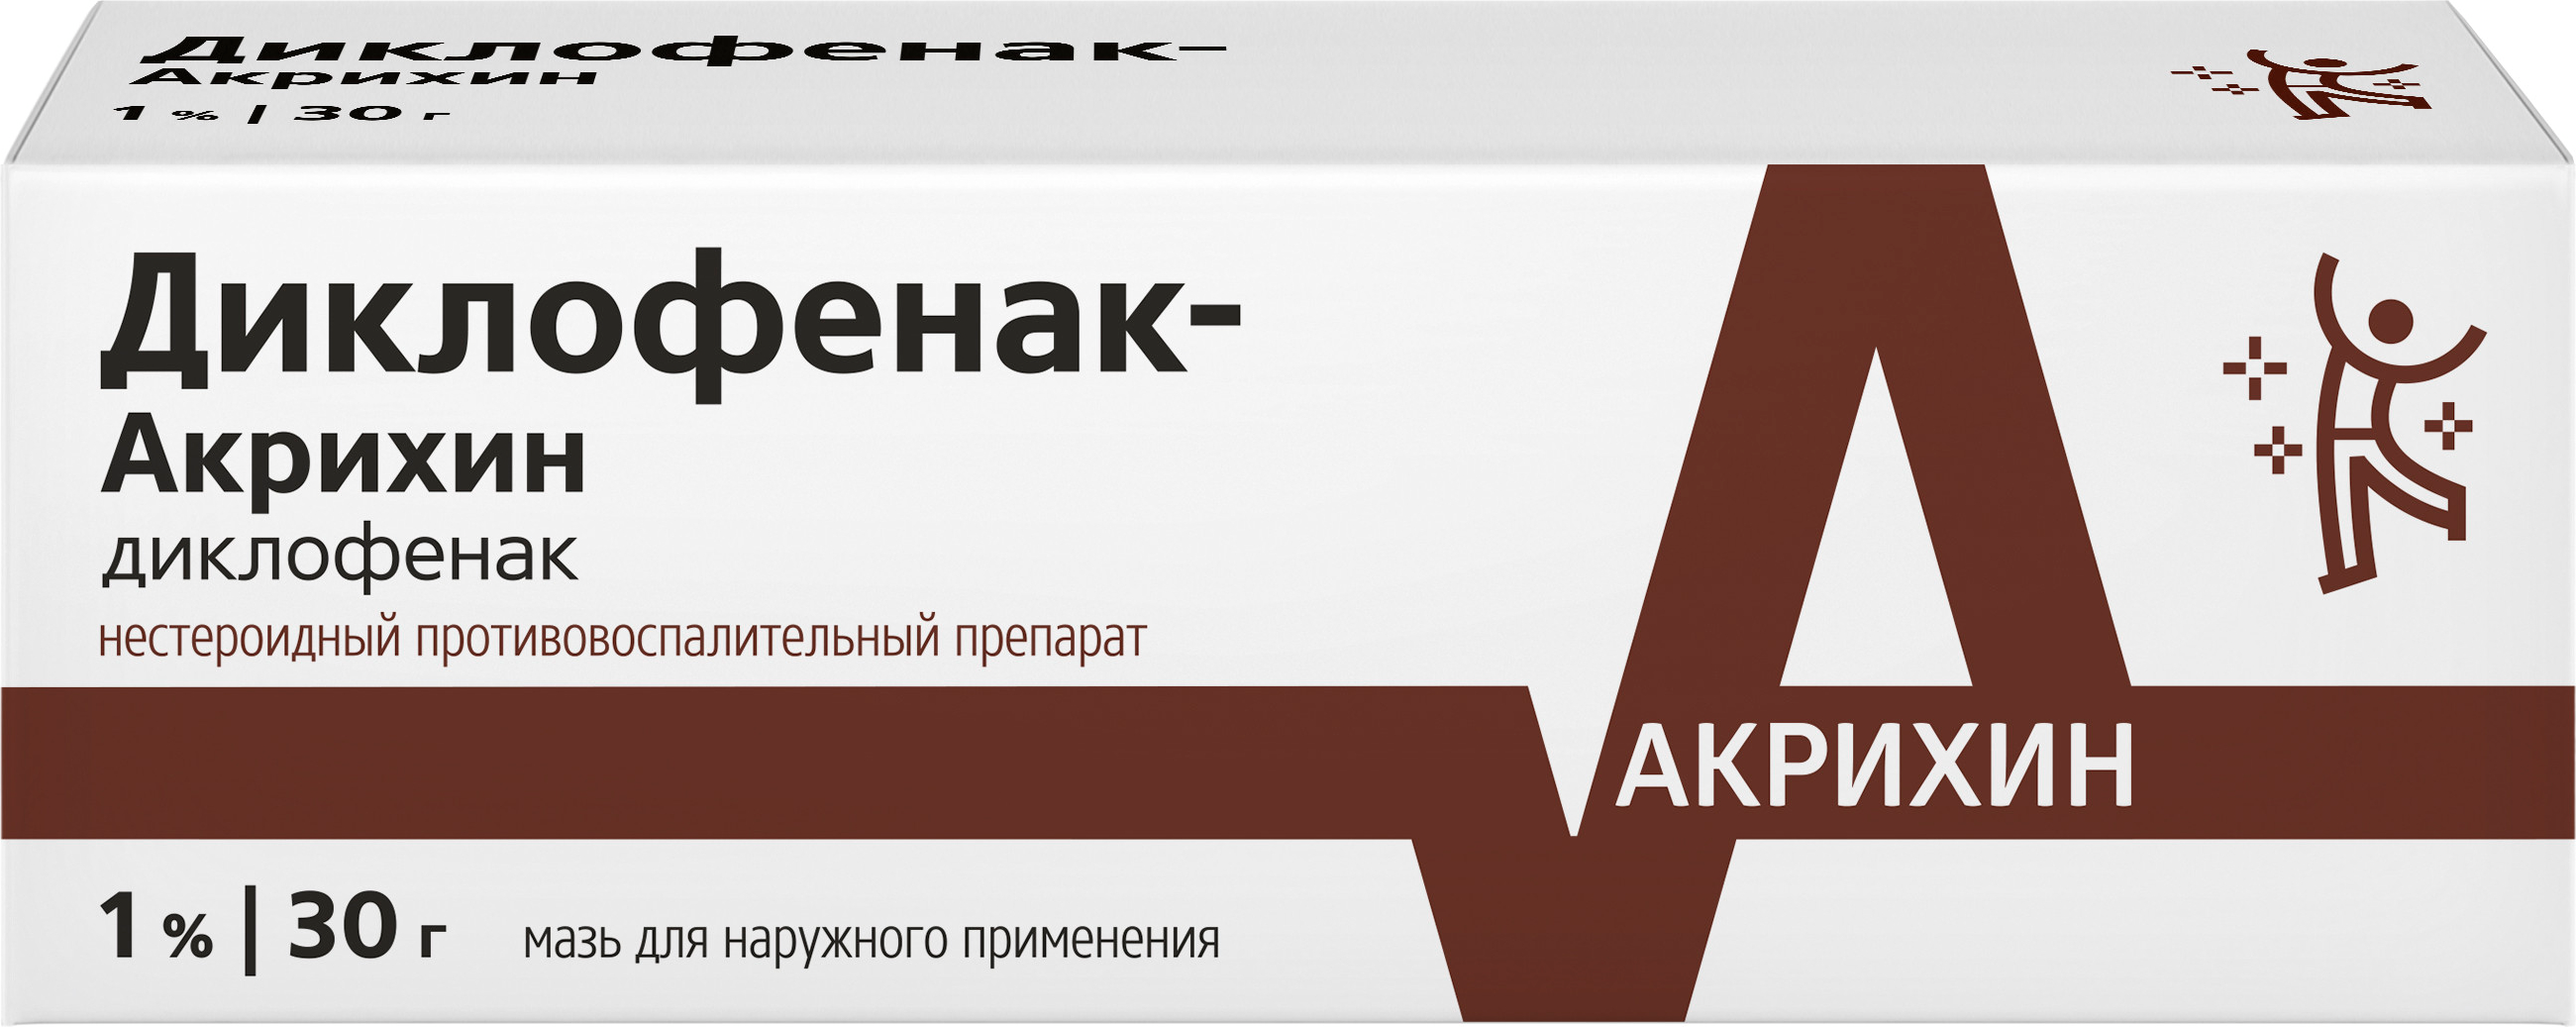 Диклофенак-Акрихин, мазь 1%, 30 г гиоксизон акрихин мазь 10г